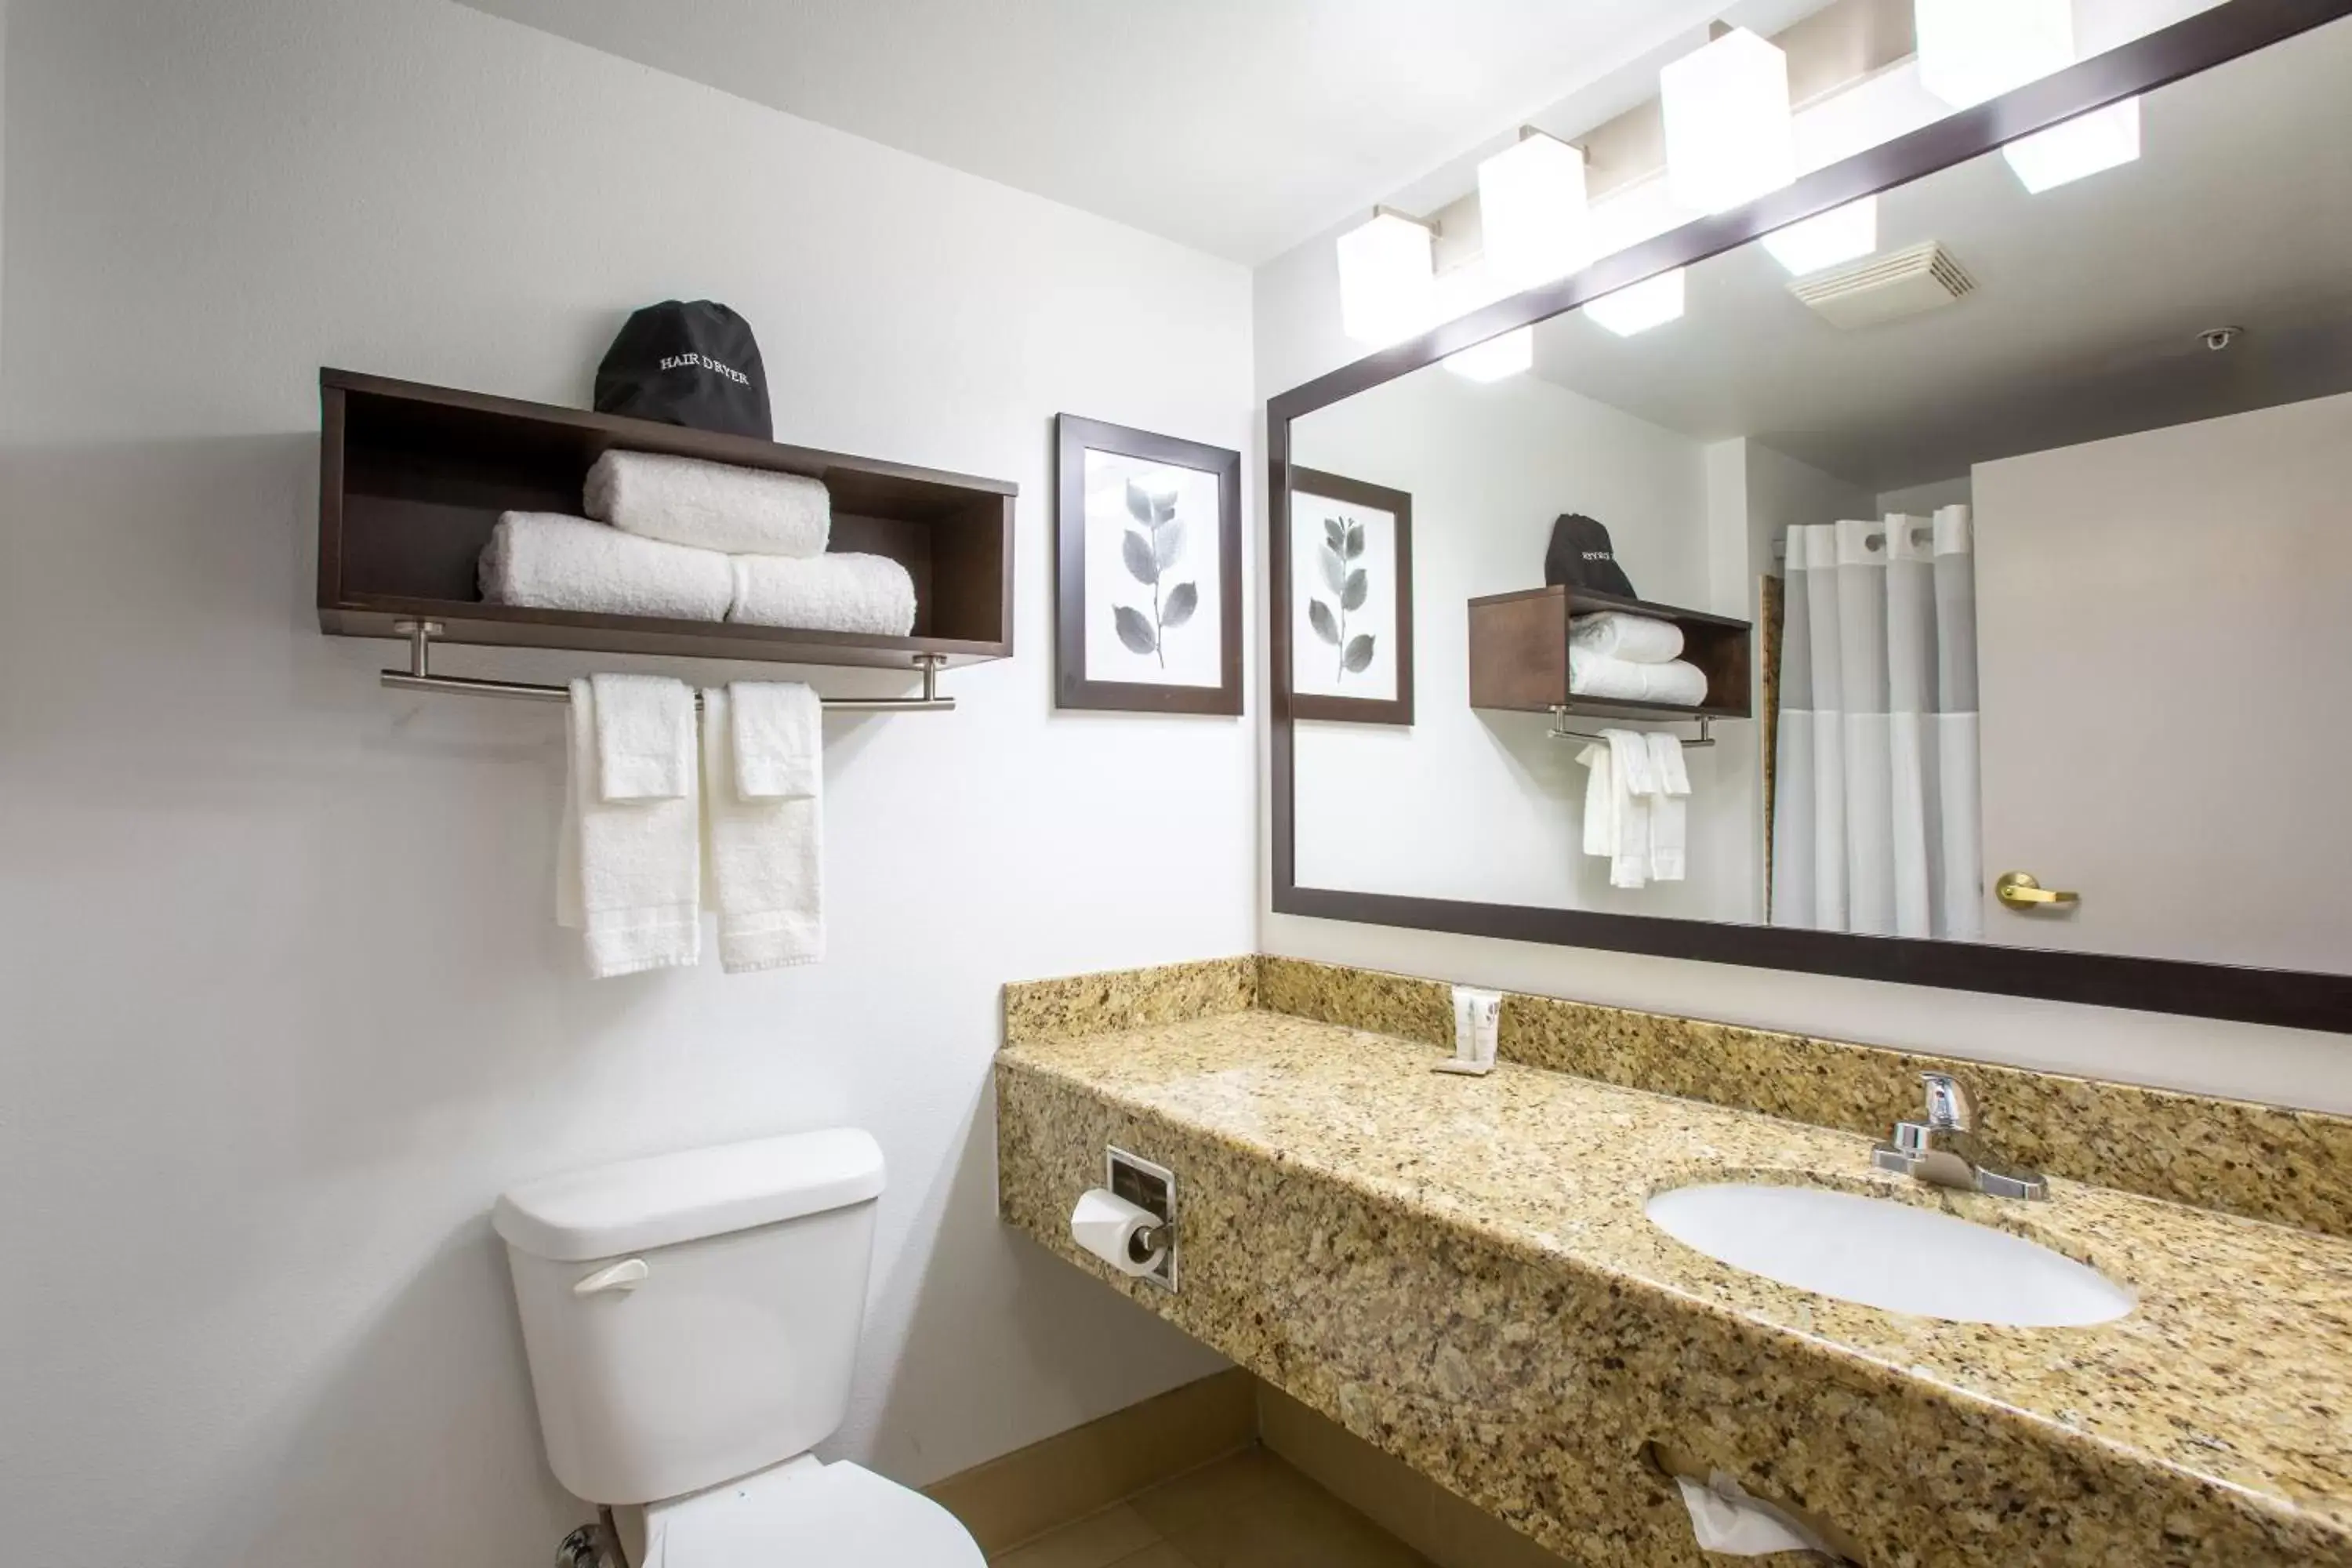 Bathroom in Country Inn & Suites by Radisson, Tucson City Center, AZ